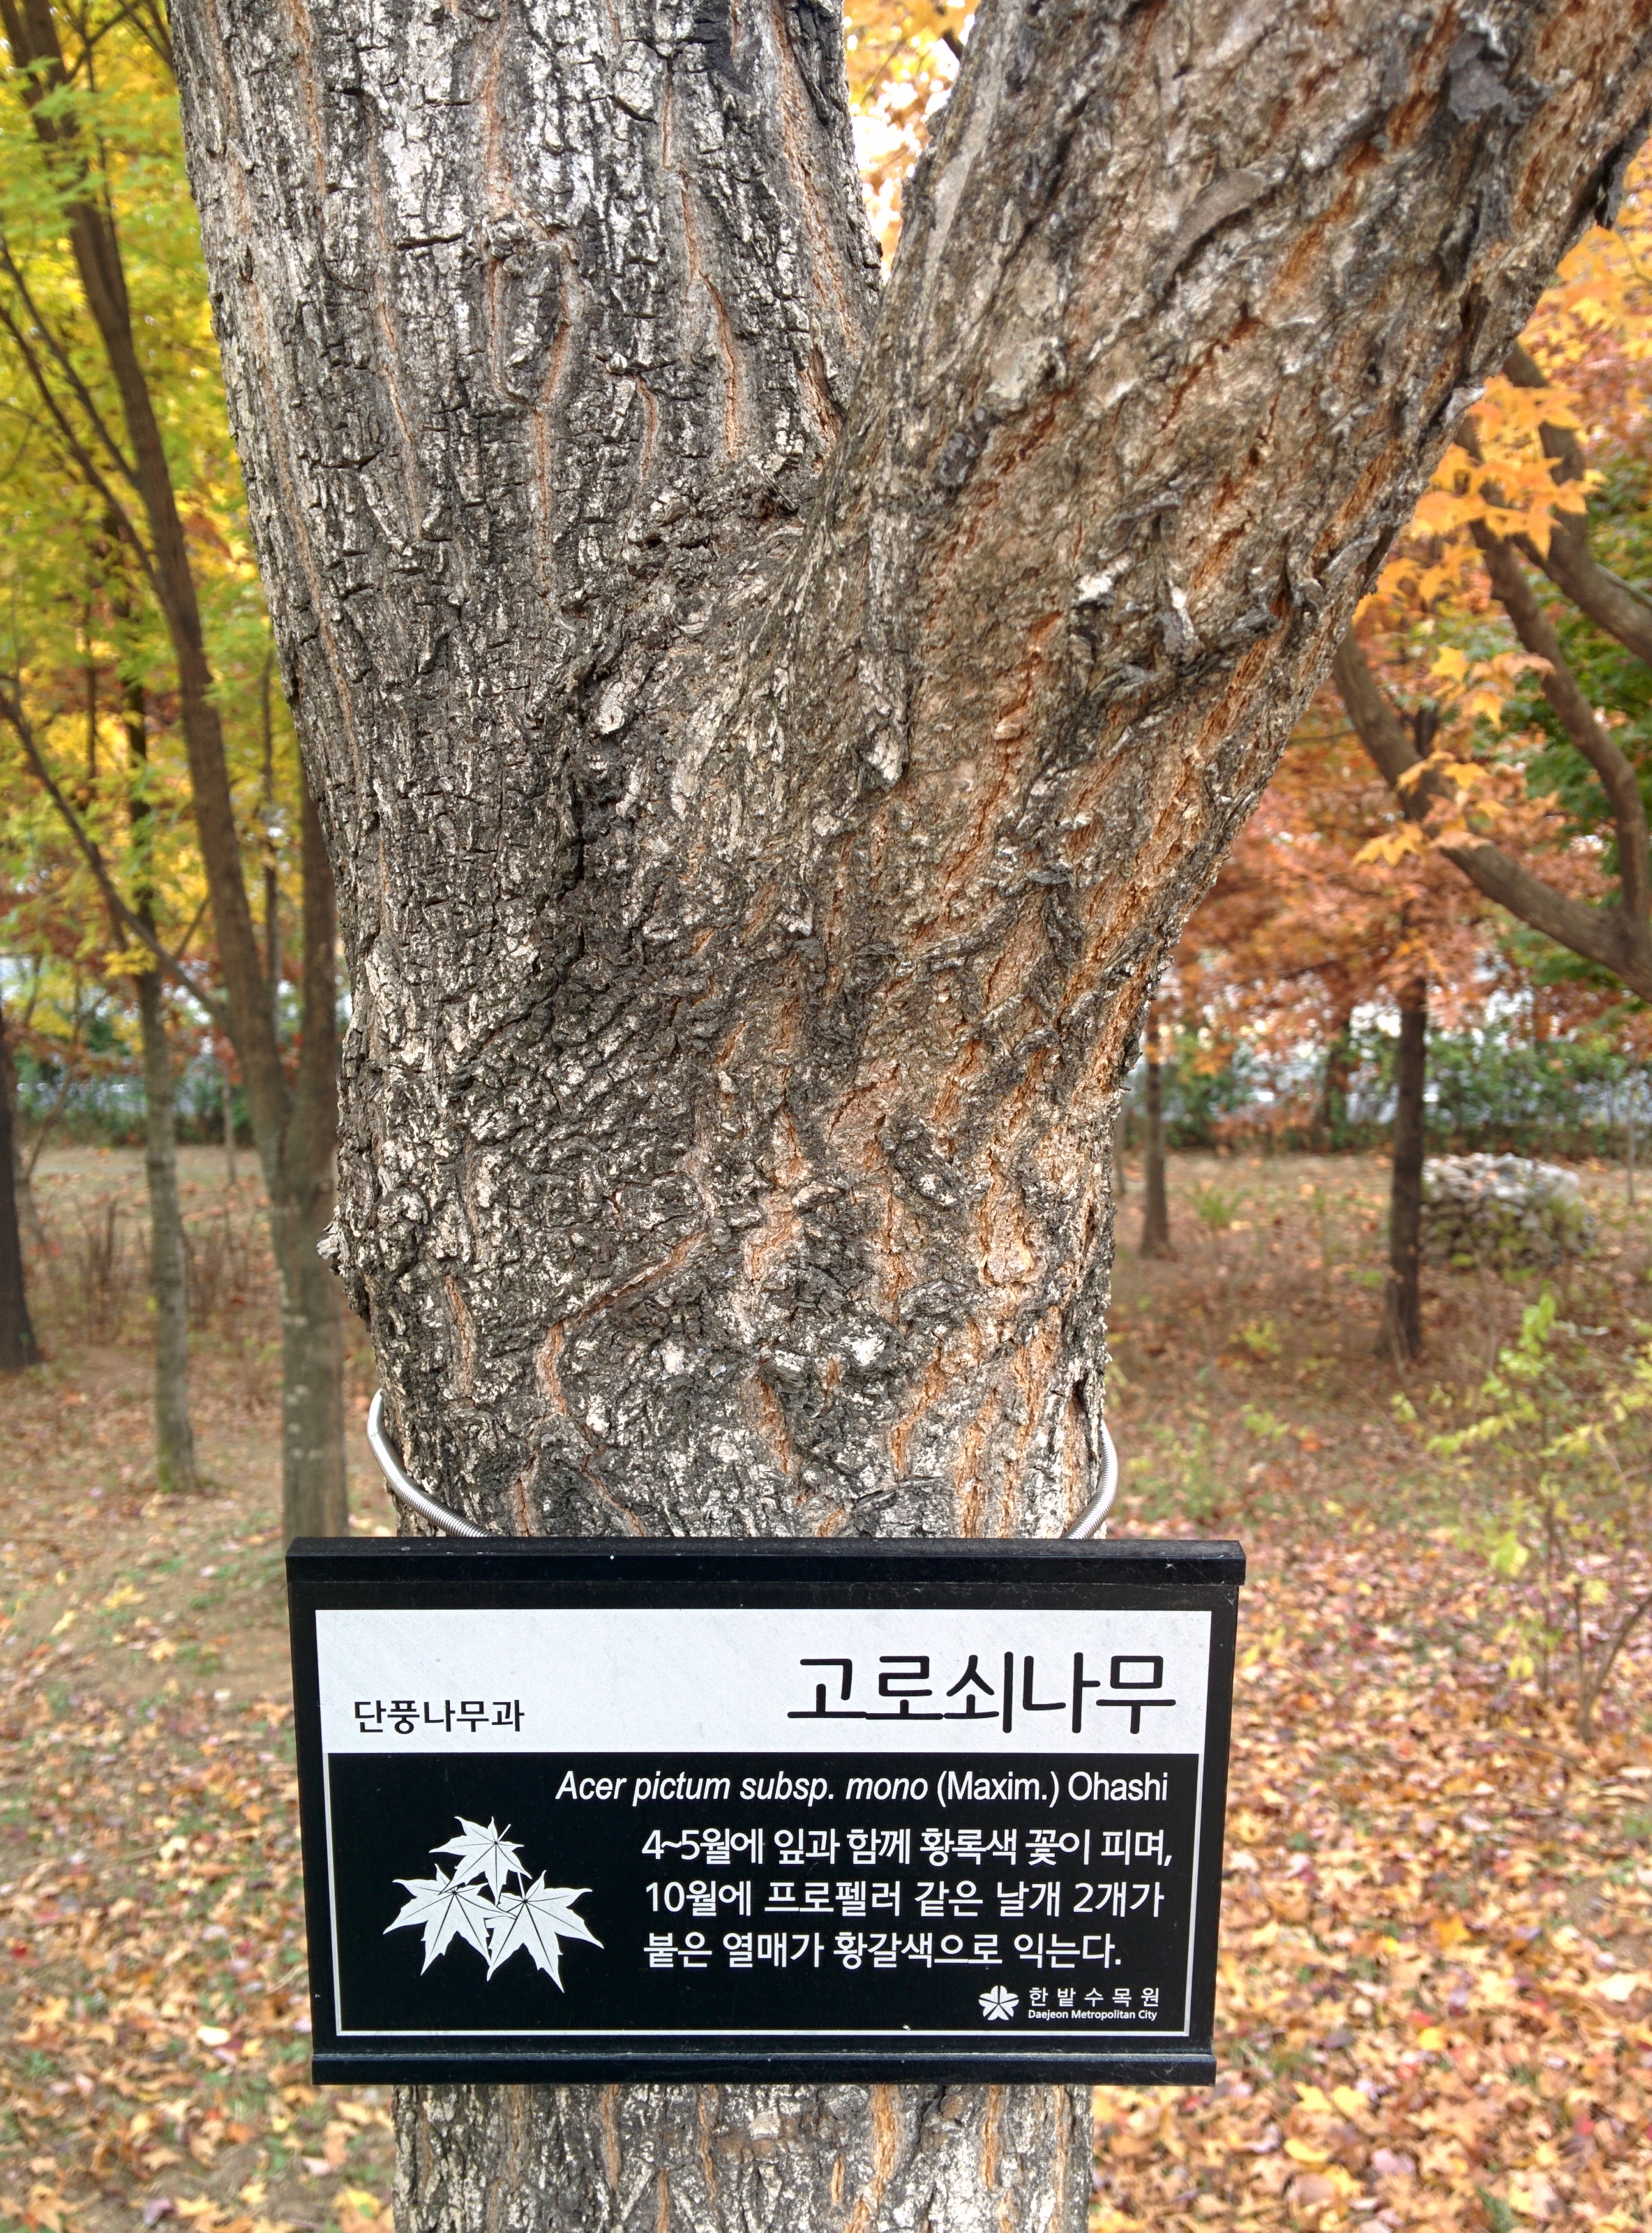 IMG_20151106_145324.jpg 다섯갈래로 잎이 갈라지는 키큰 고로쇠나무